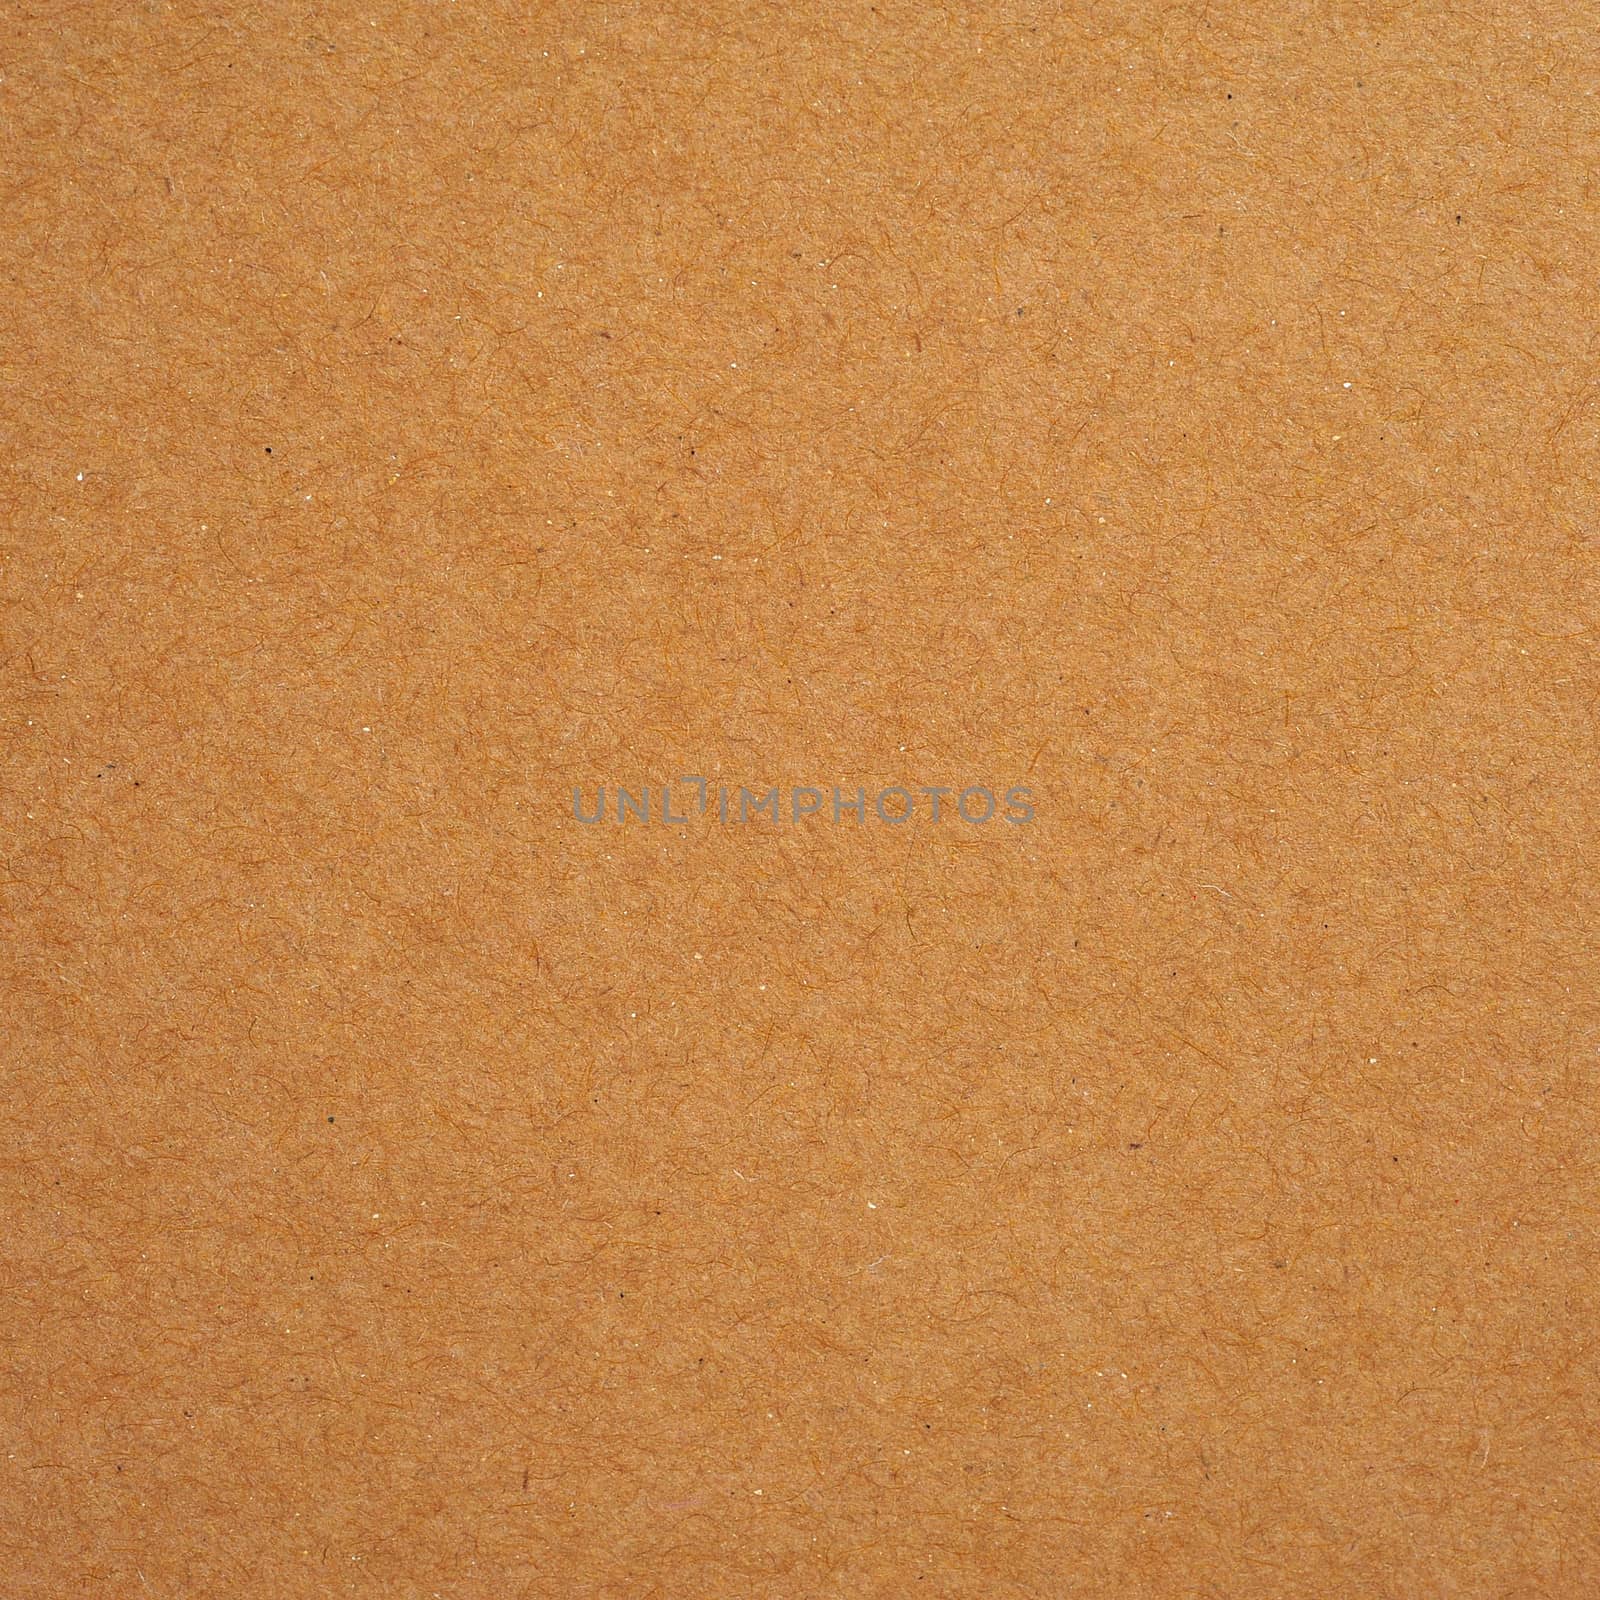 brown cardboard texture